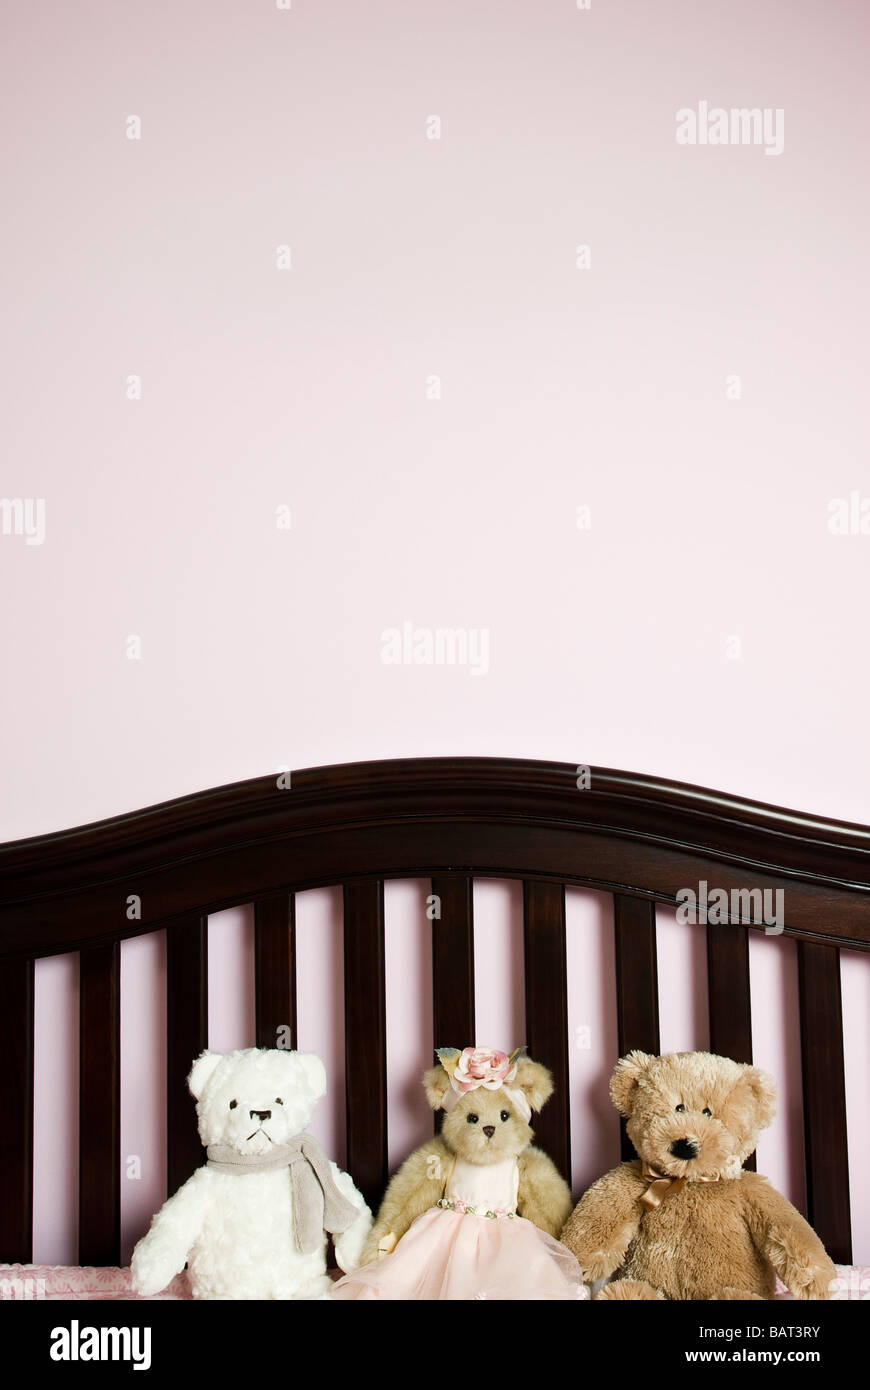 baby crib with teddy bears Stock Photo